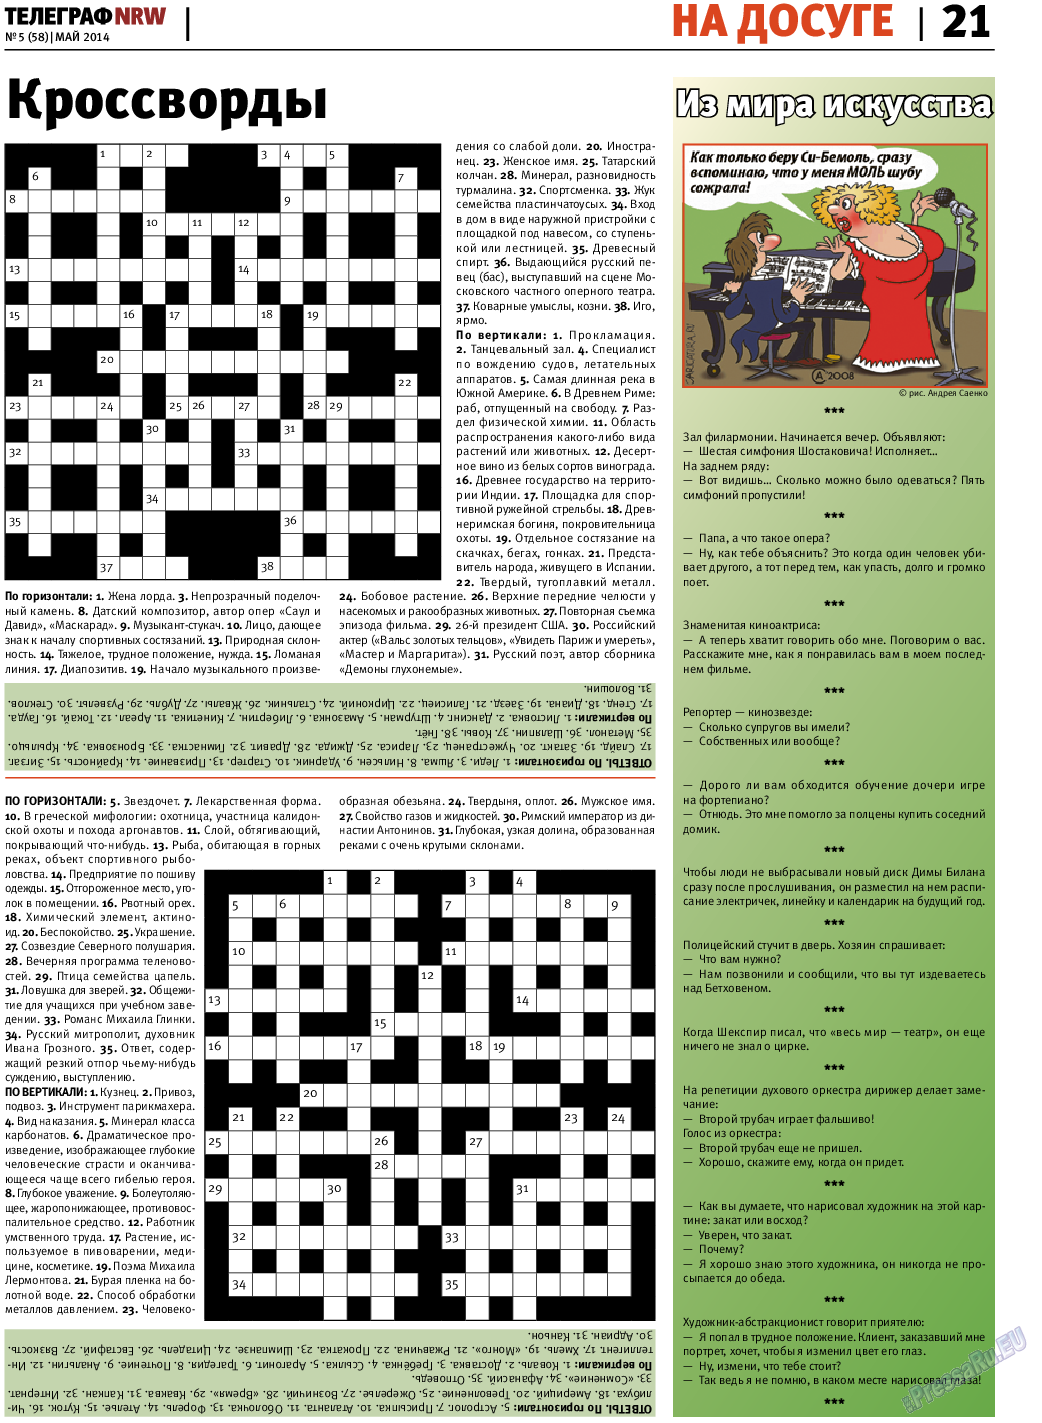 Телеграф NRW, газета. 2014 №5 стр.21